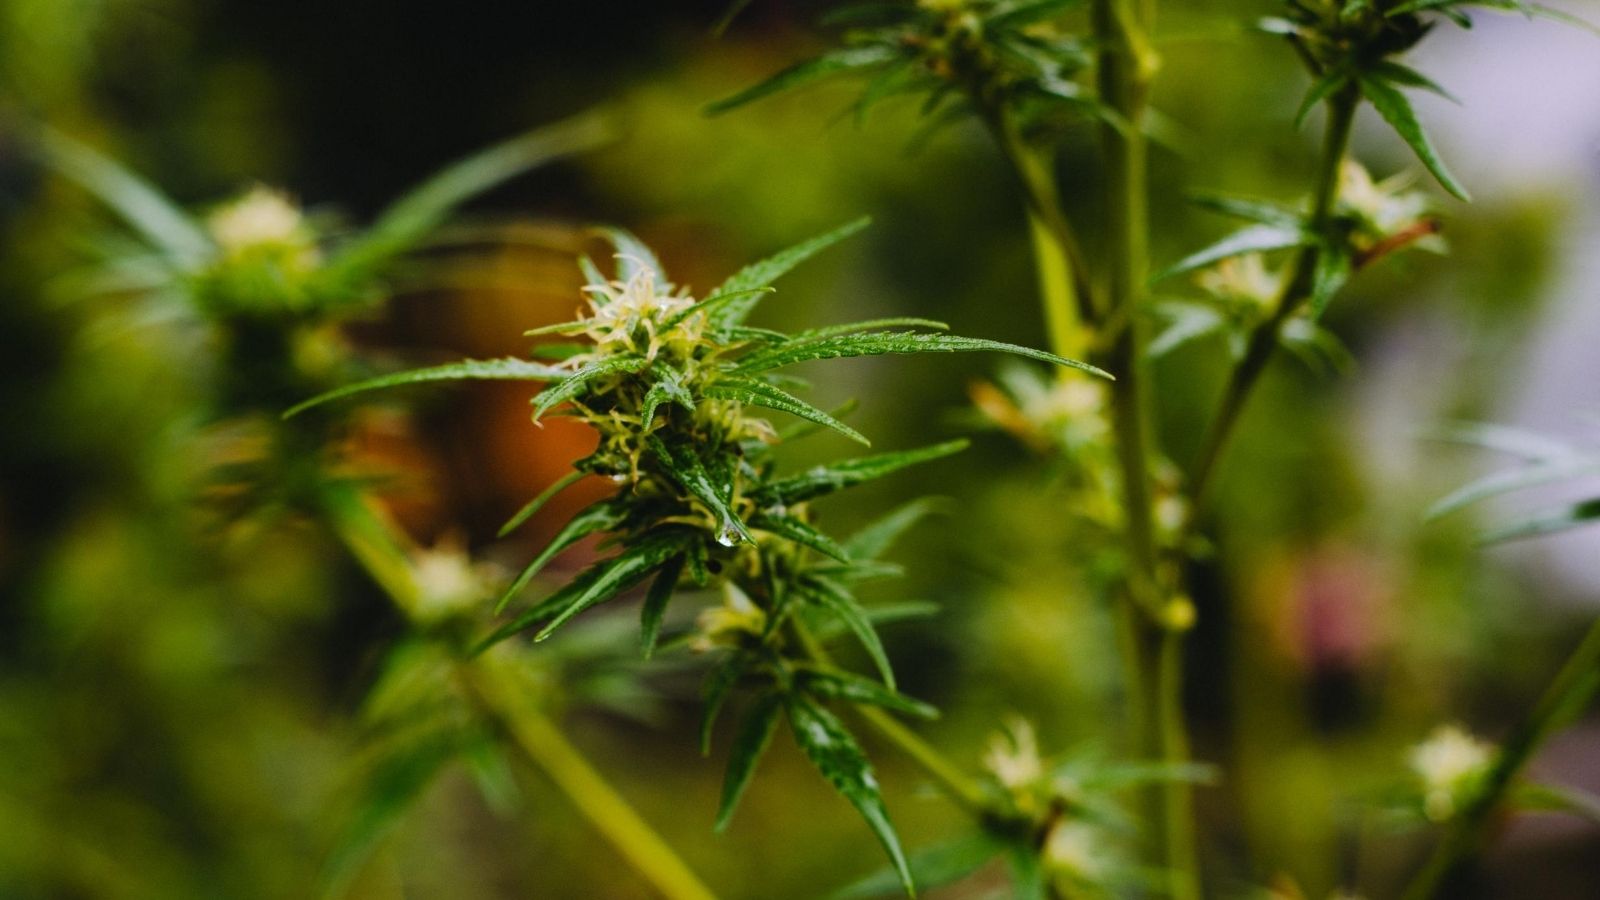 Close up of an immature cannabis flower.